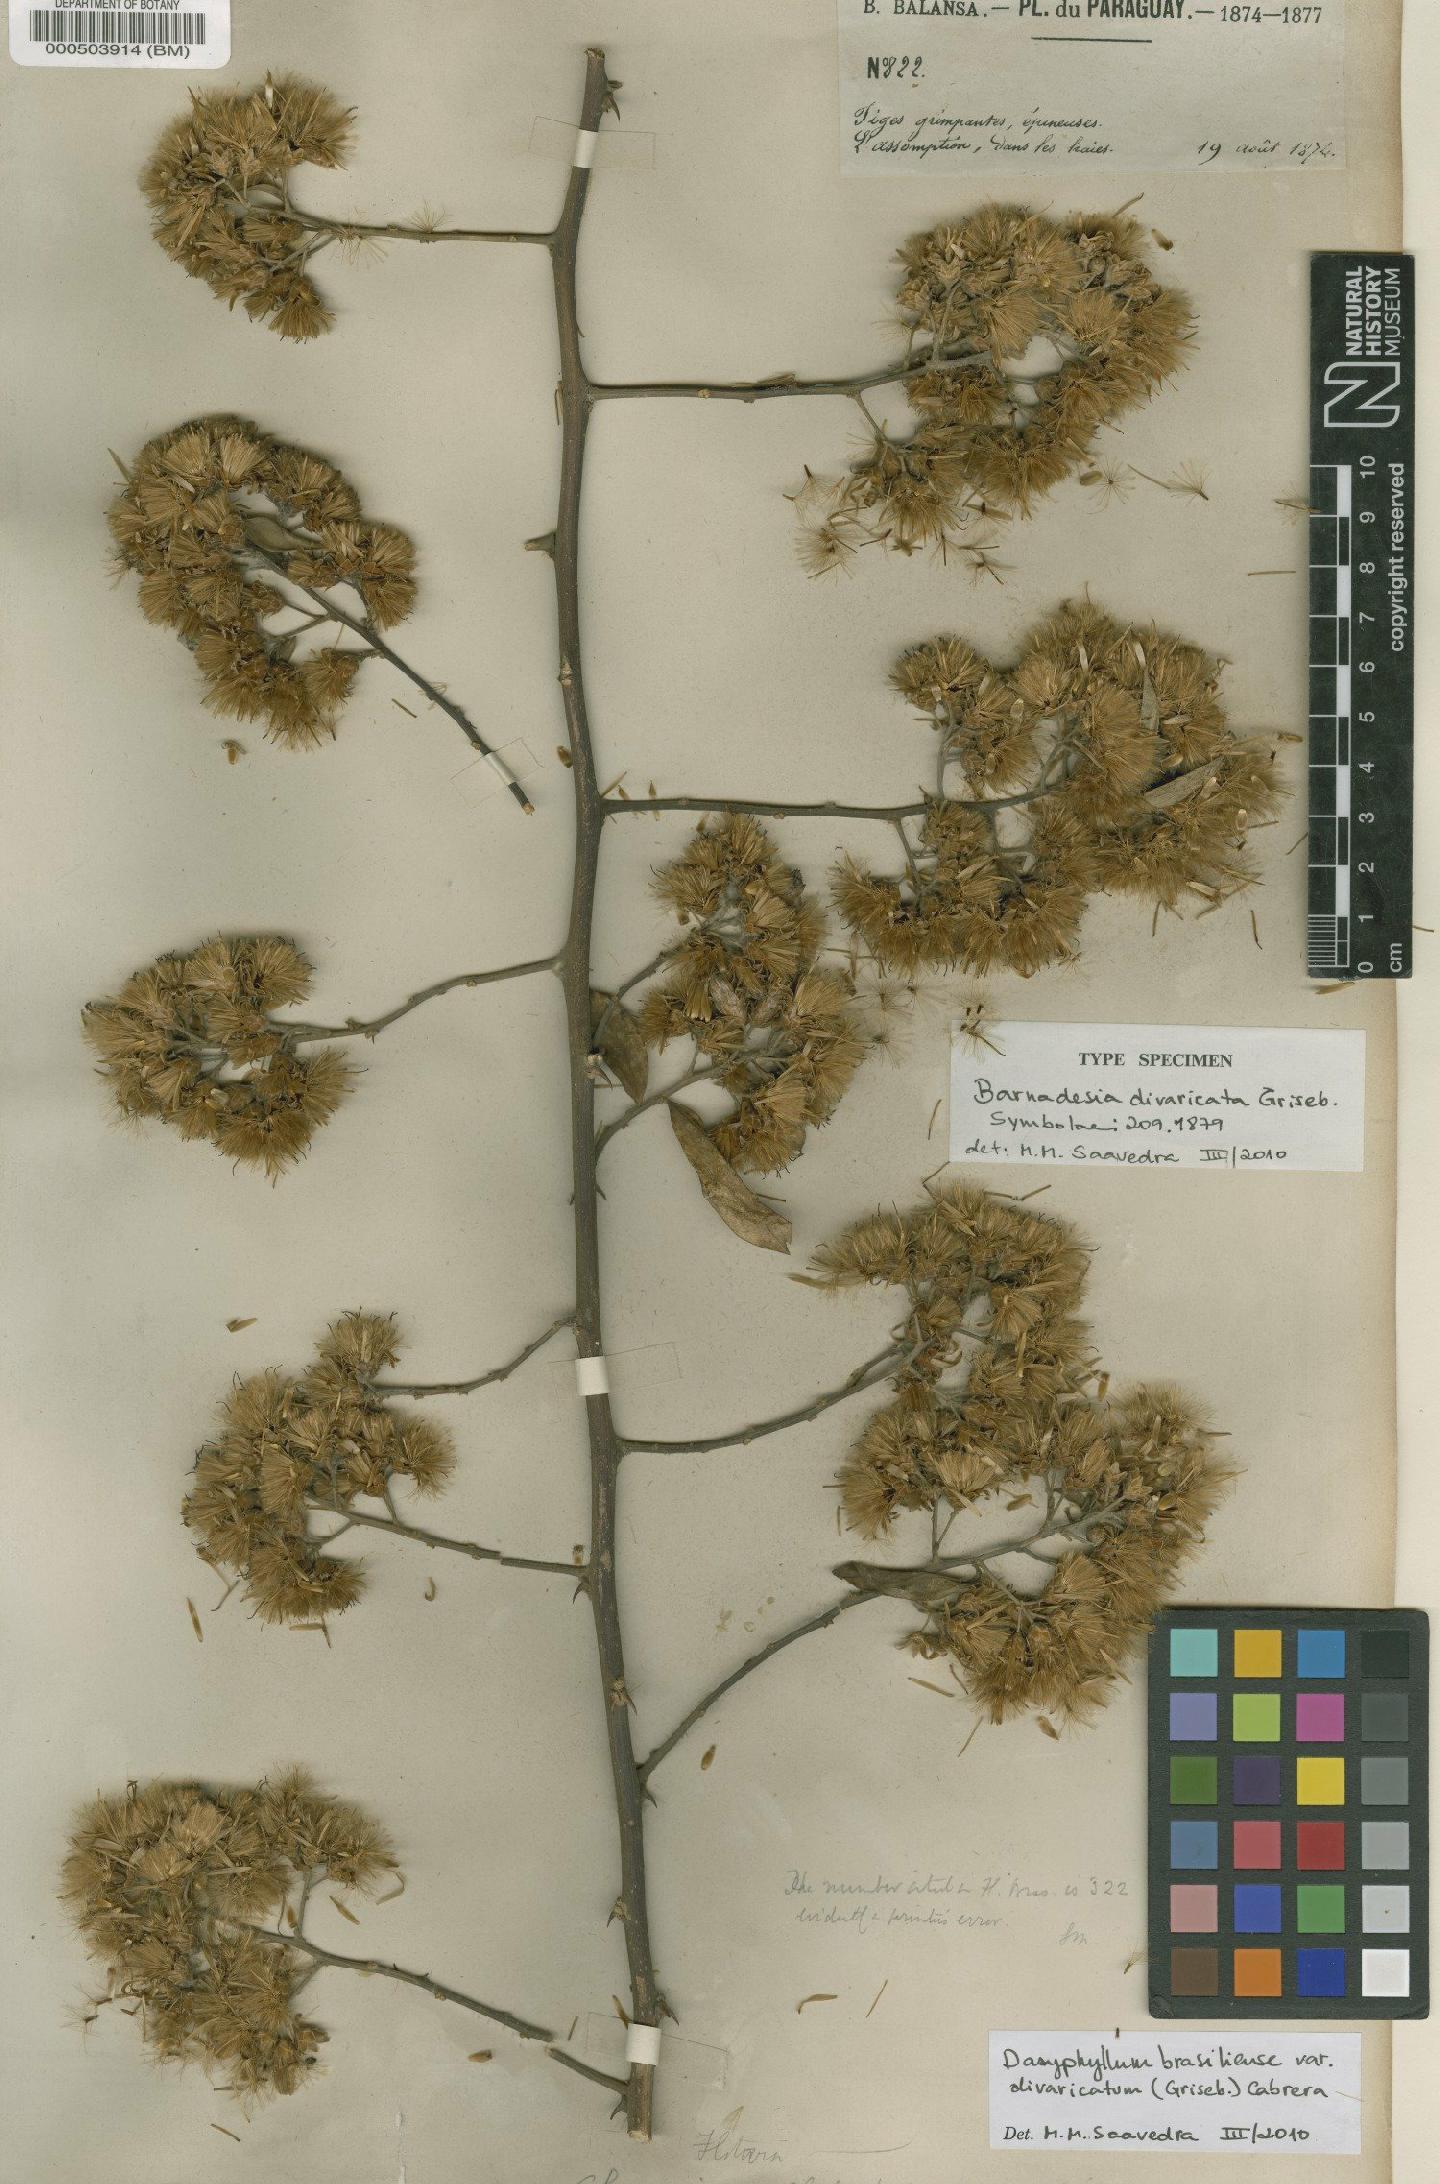 To NHMUK collection (Dasyphyllum brasiliense var. divaricatum (Griseb.) Cabrera; Type; NHMUK:ecatalogue:4566875)